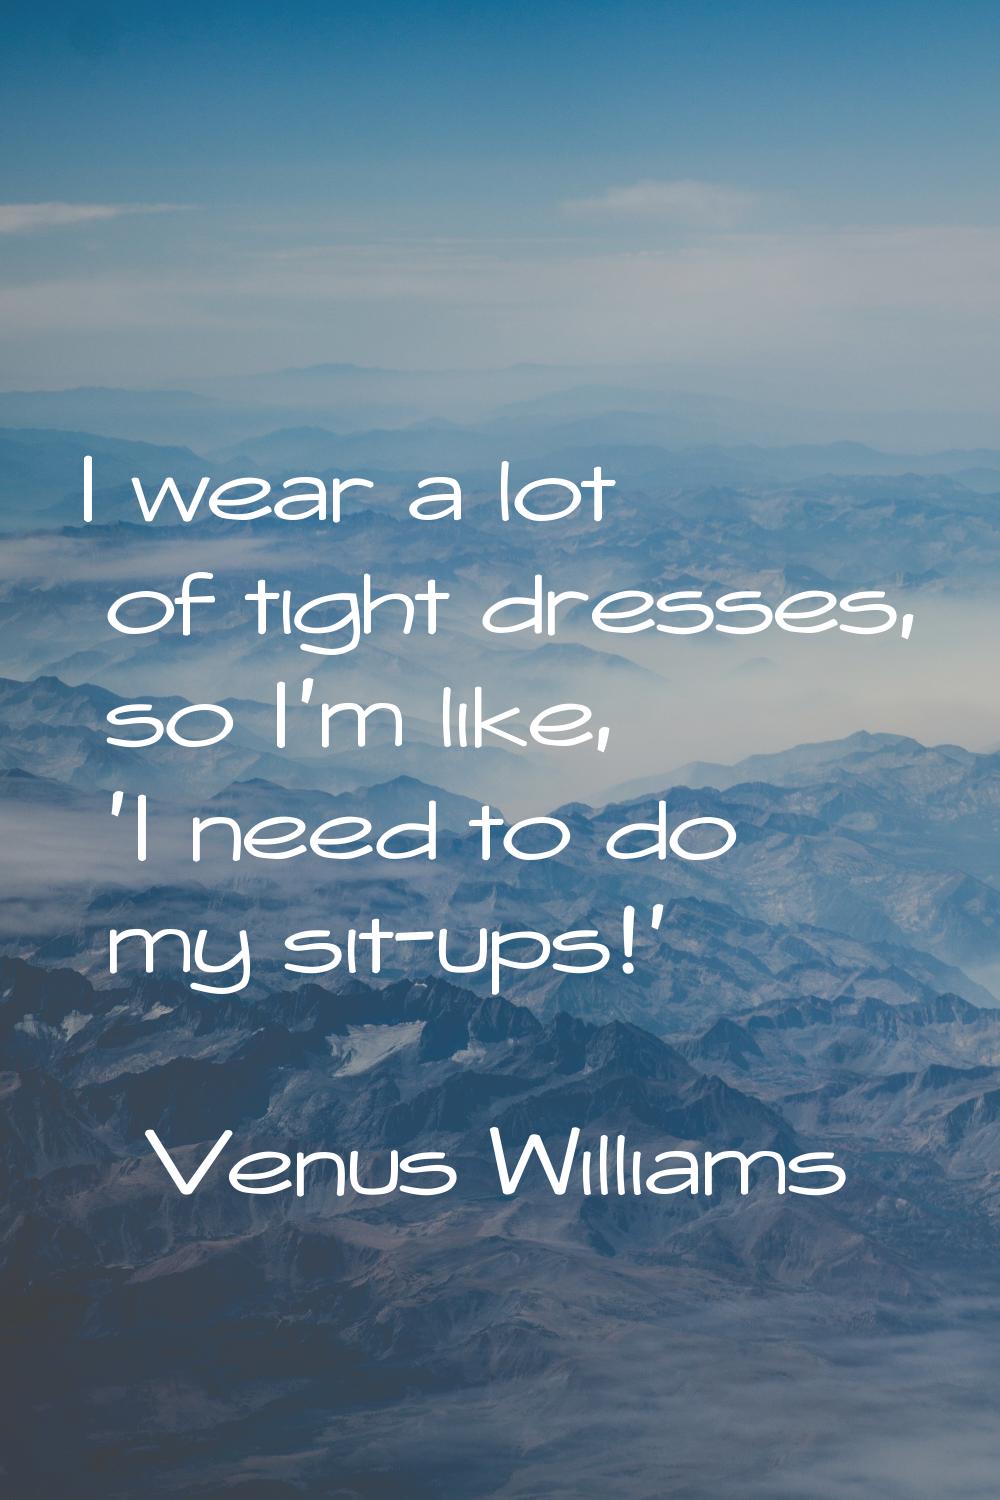 I wear a lot of tight dresses, so I'm like, 'I need to do my sit-ups!'